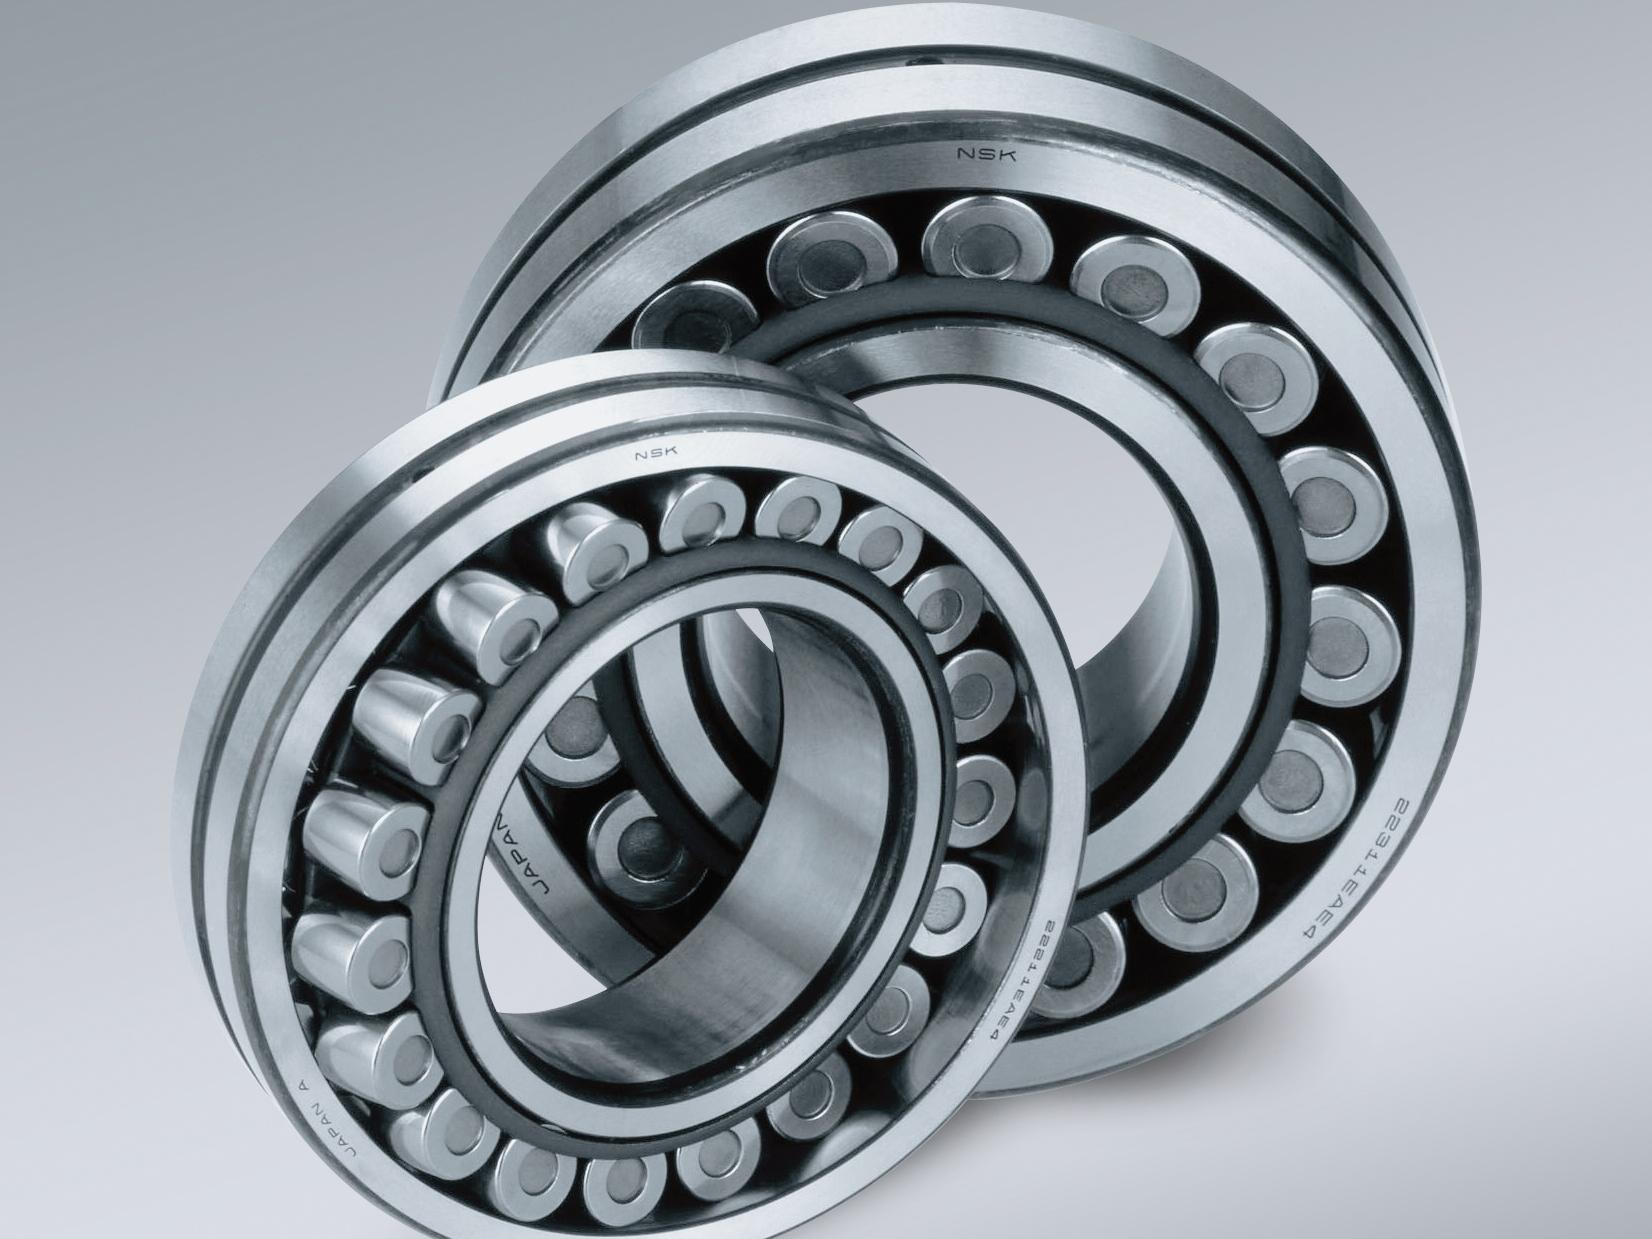 NSK bearings help eliminate repeated bearing failures